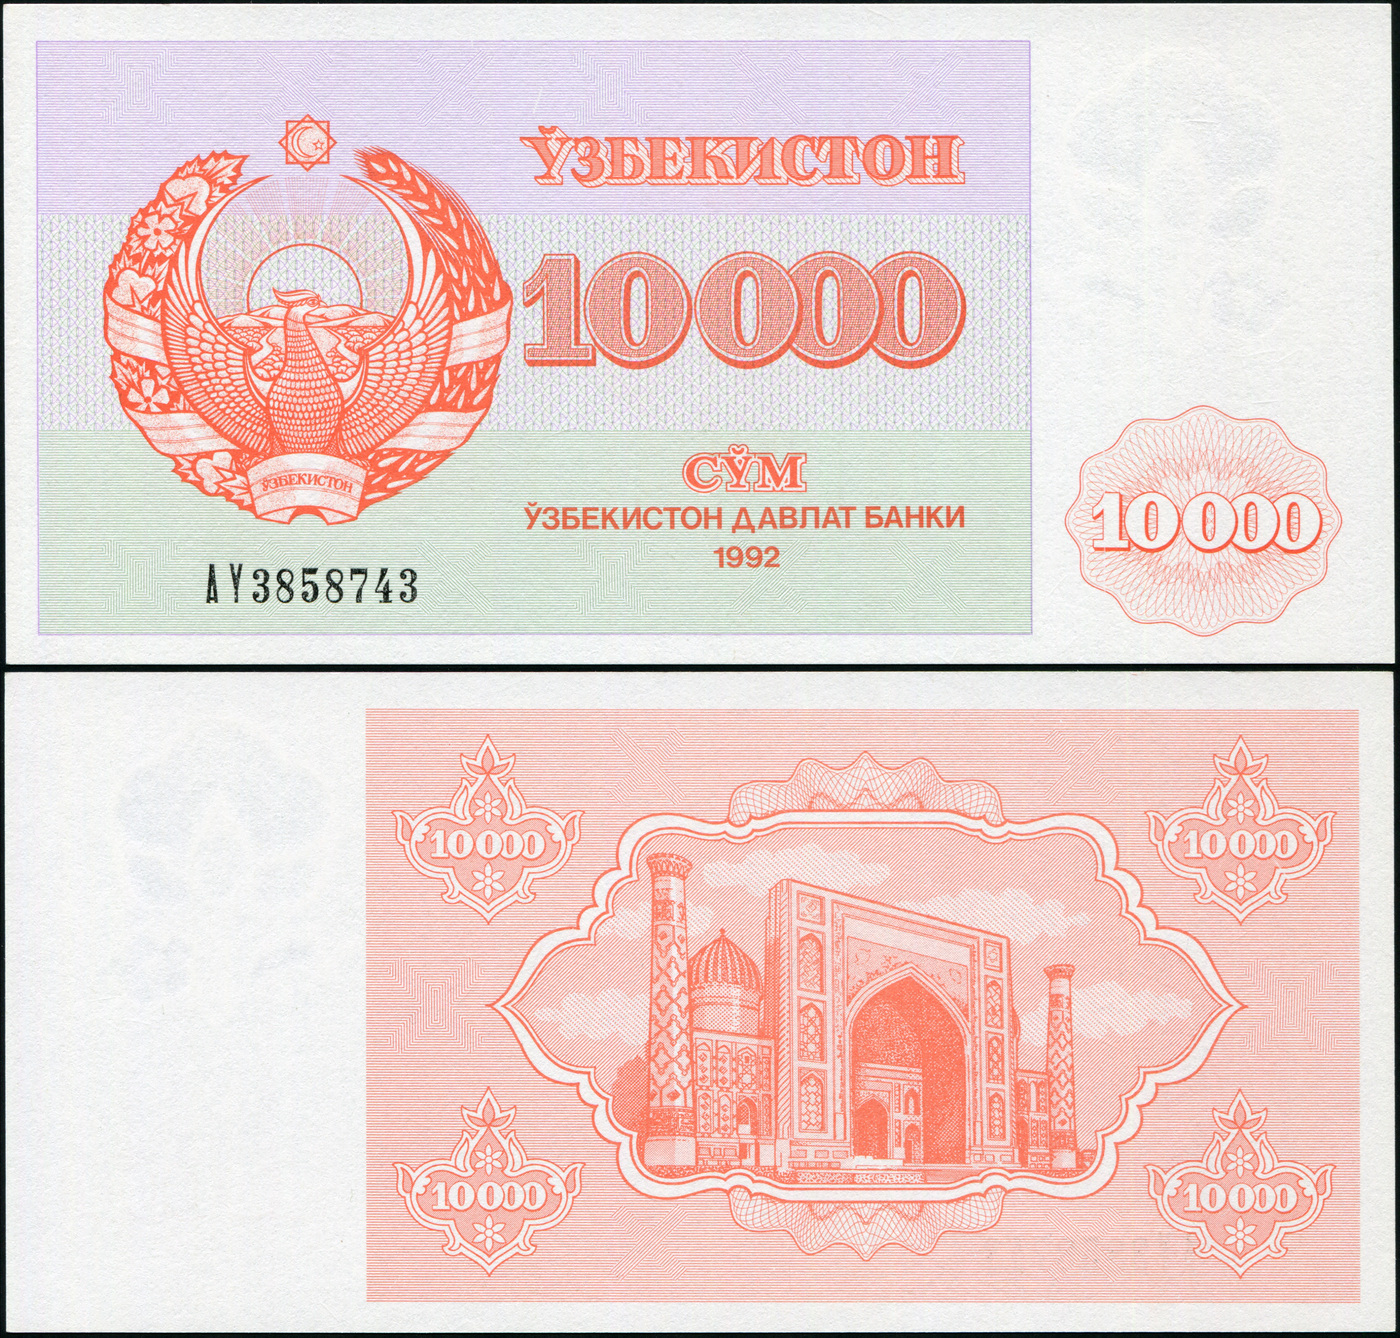 Рубли в узб сумах. Узбекистан: 10000 сумов 1992 г.. Купюра Узбекистан 1992. Банкноты Узбекистана 10000. Банкнота Узбекистан 10000 сум 1994.